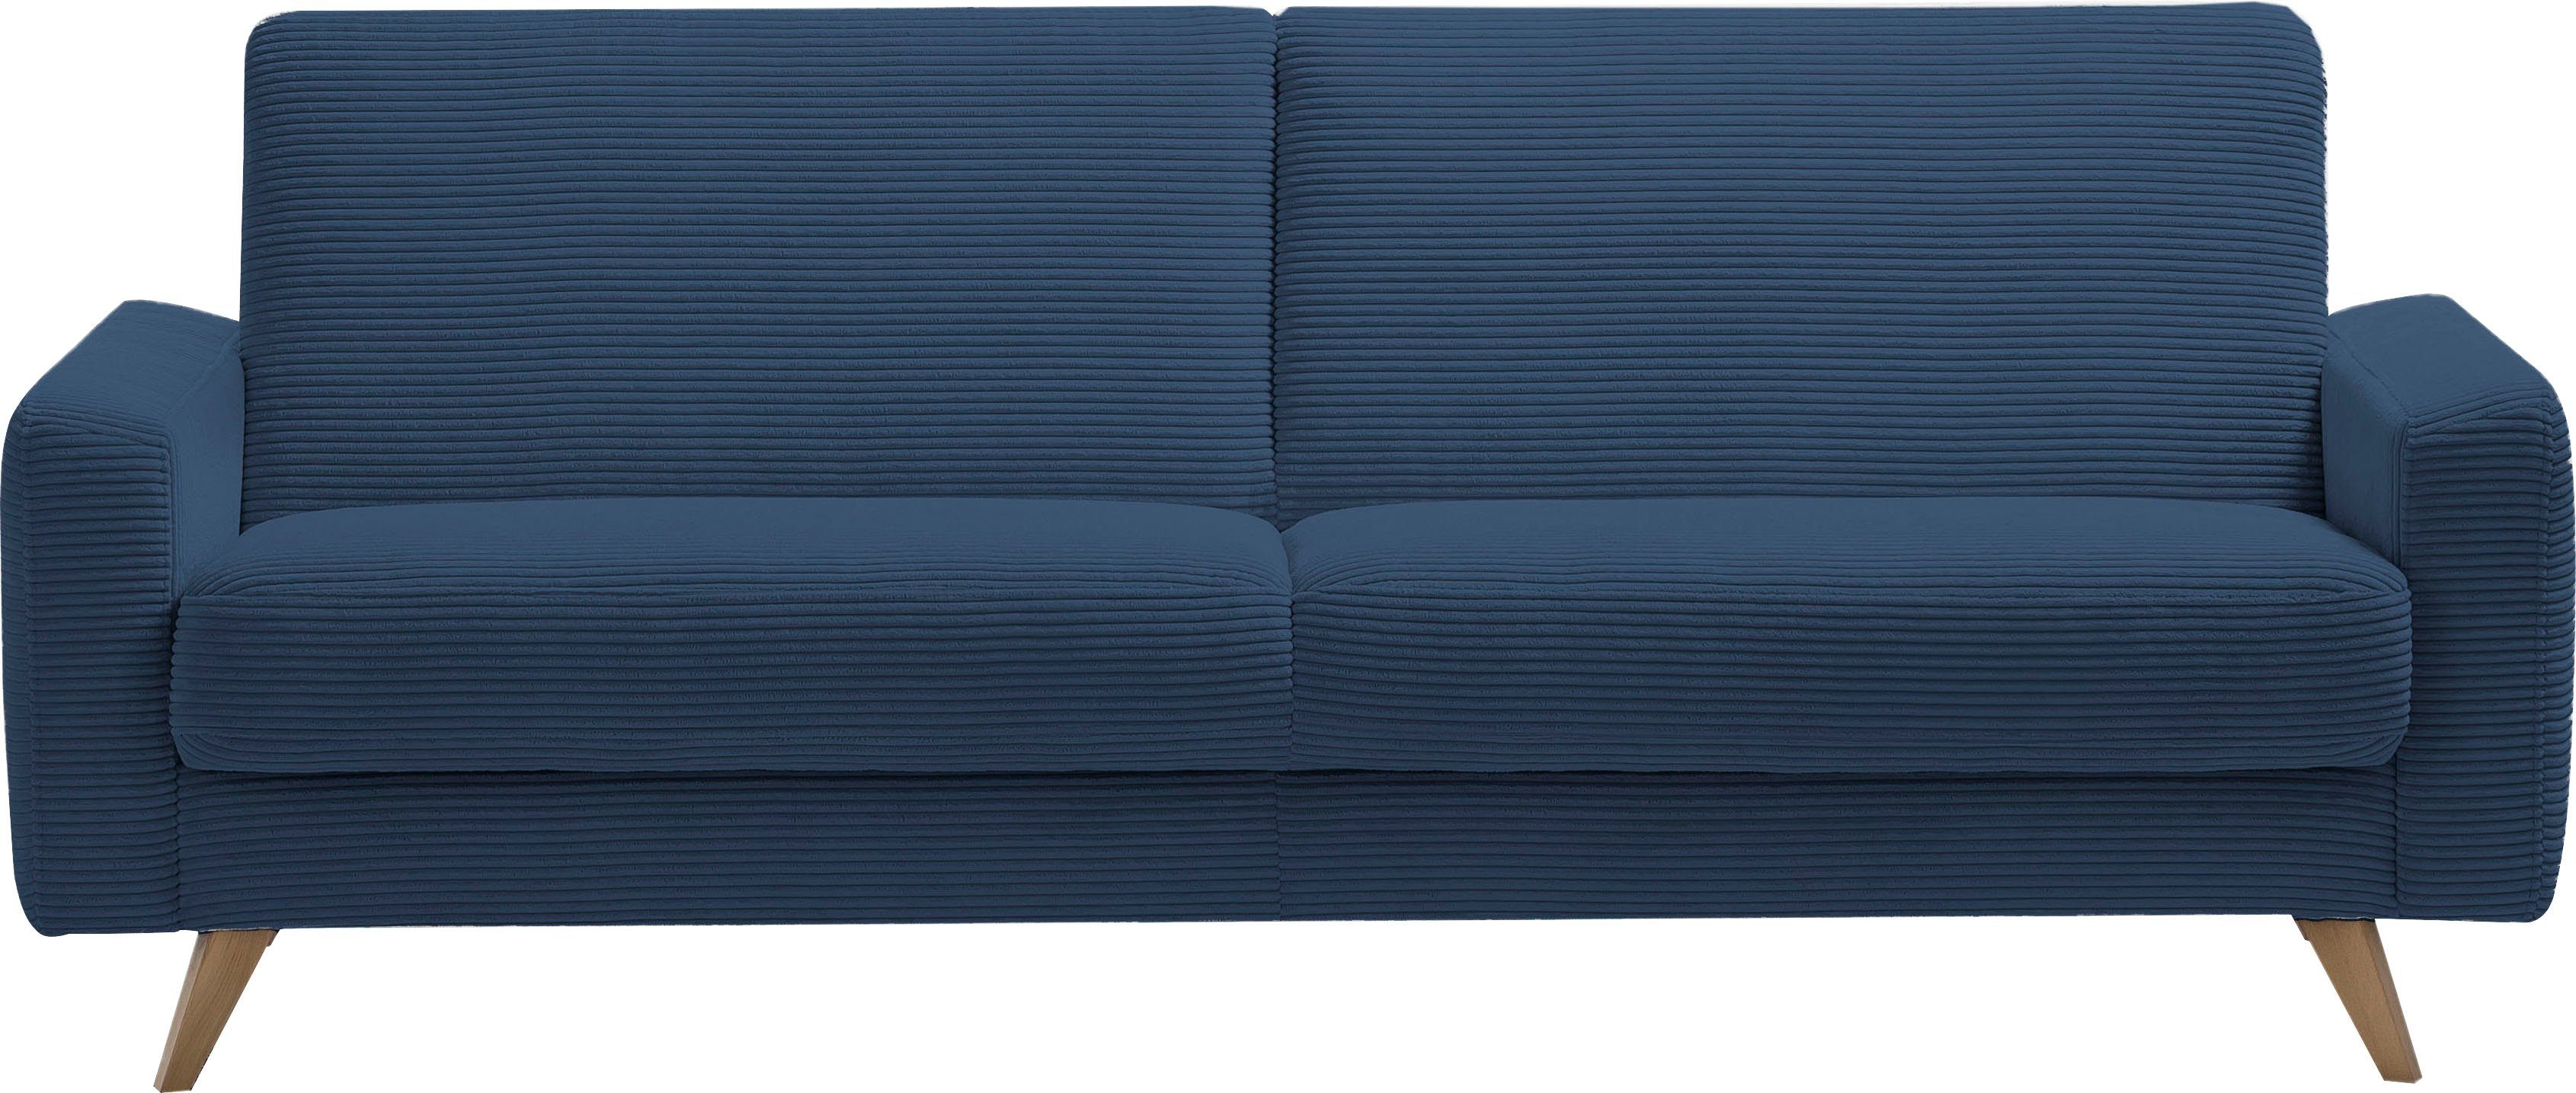 sofa Bettkasten Samso, - Inklusive und fashion 3-Sitzer Bettfunktion navy exxpo